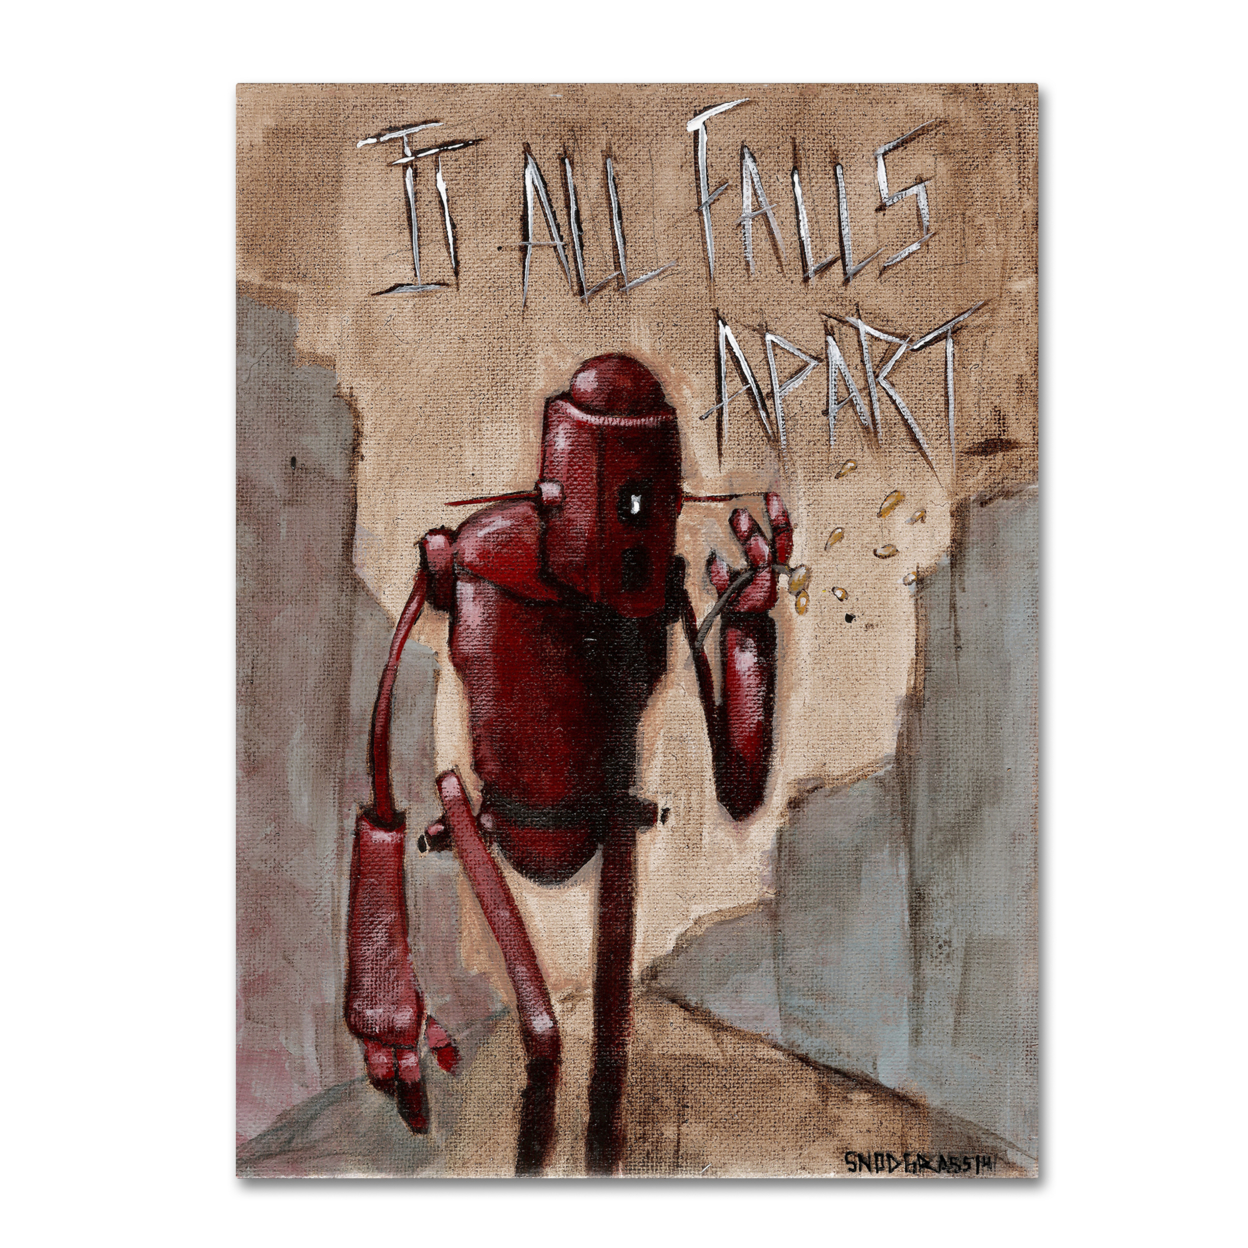 Craig Snodgrass 'It All Falls Apart' Canvas Wall Art 35 X 47 Inches